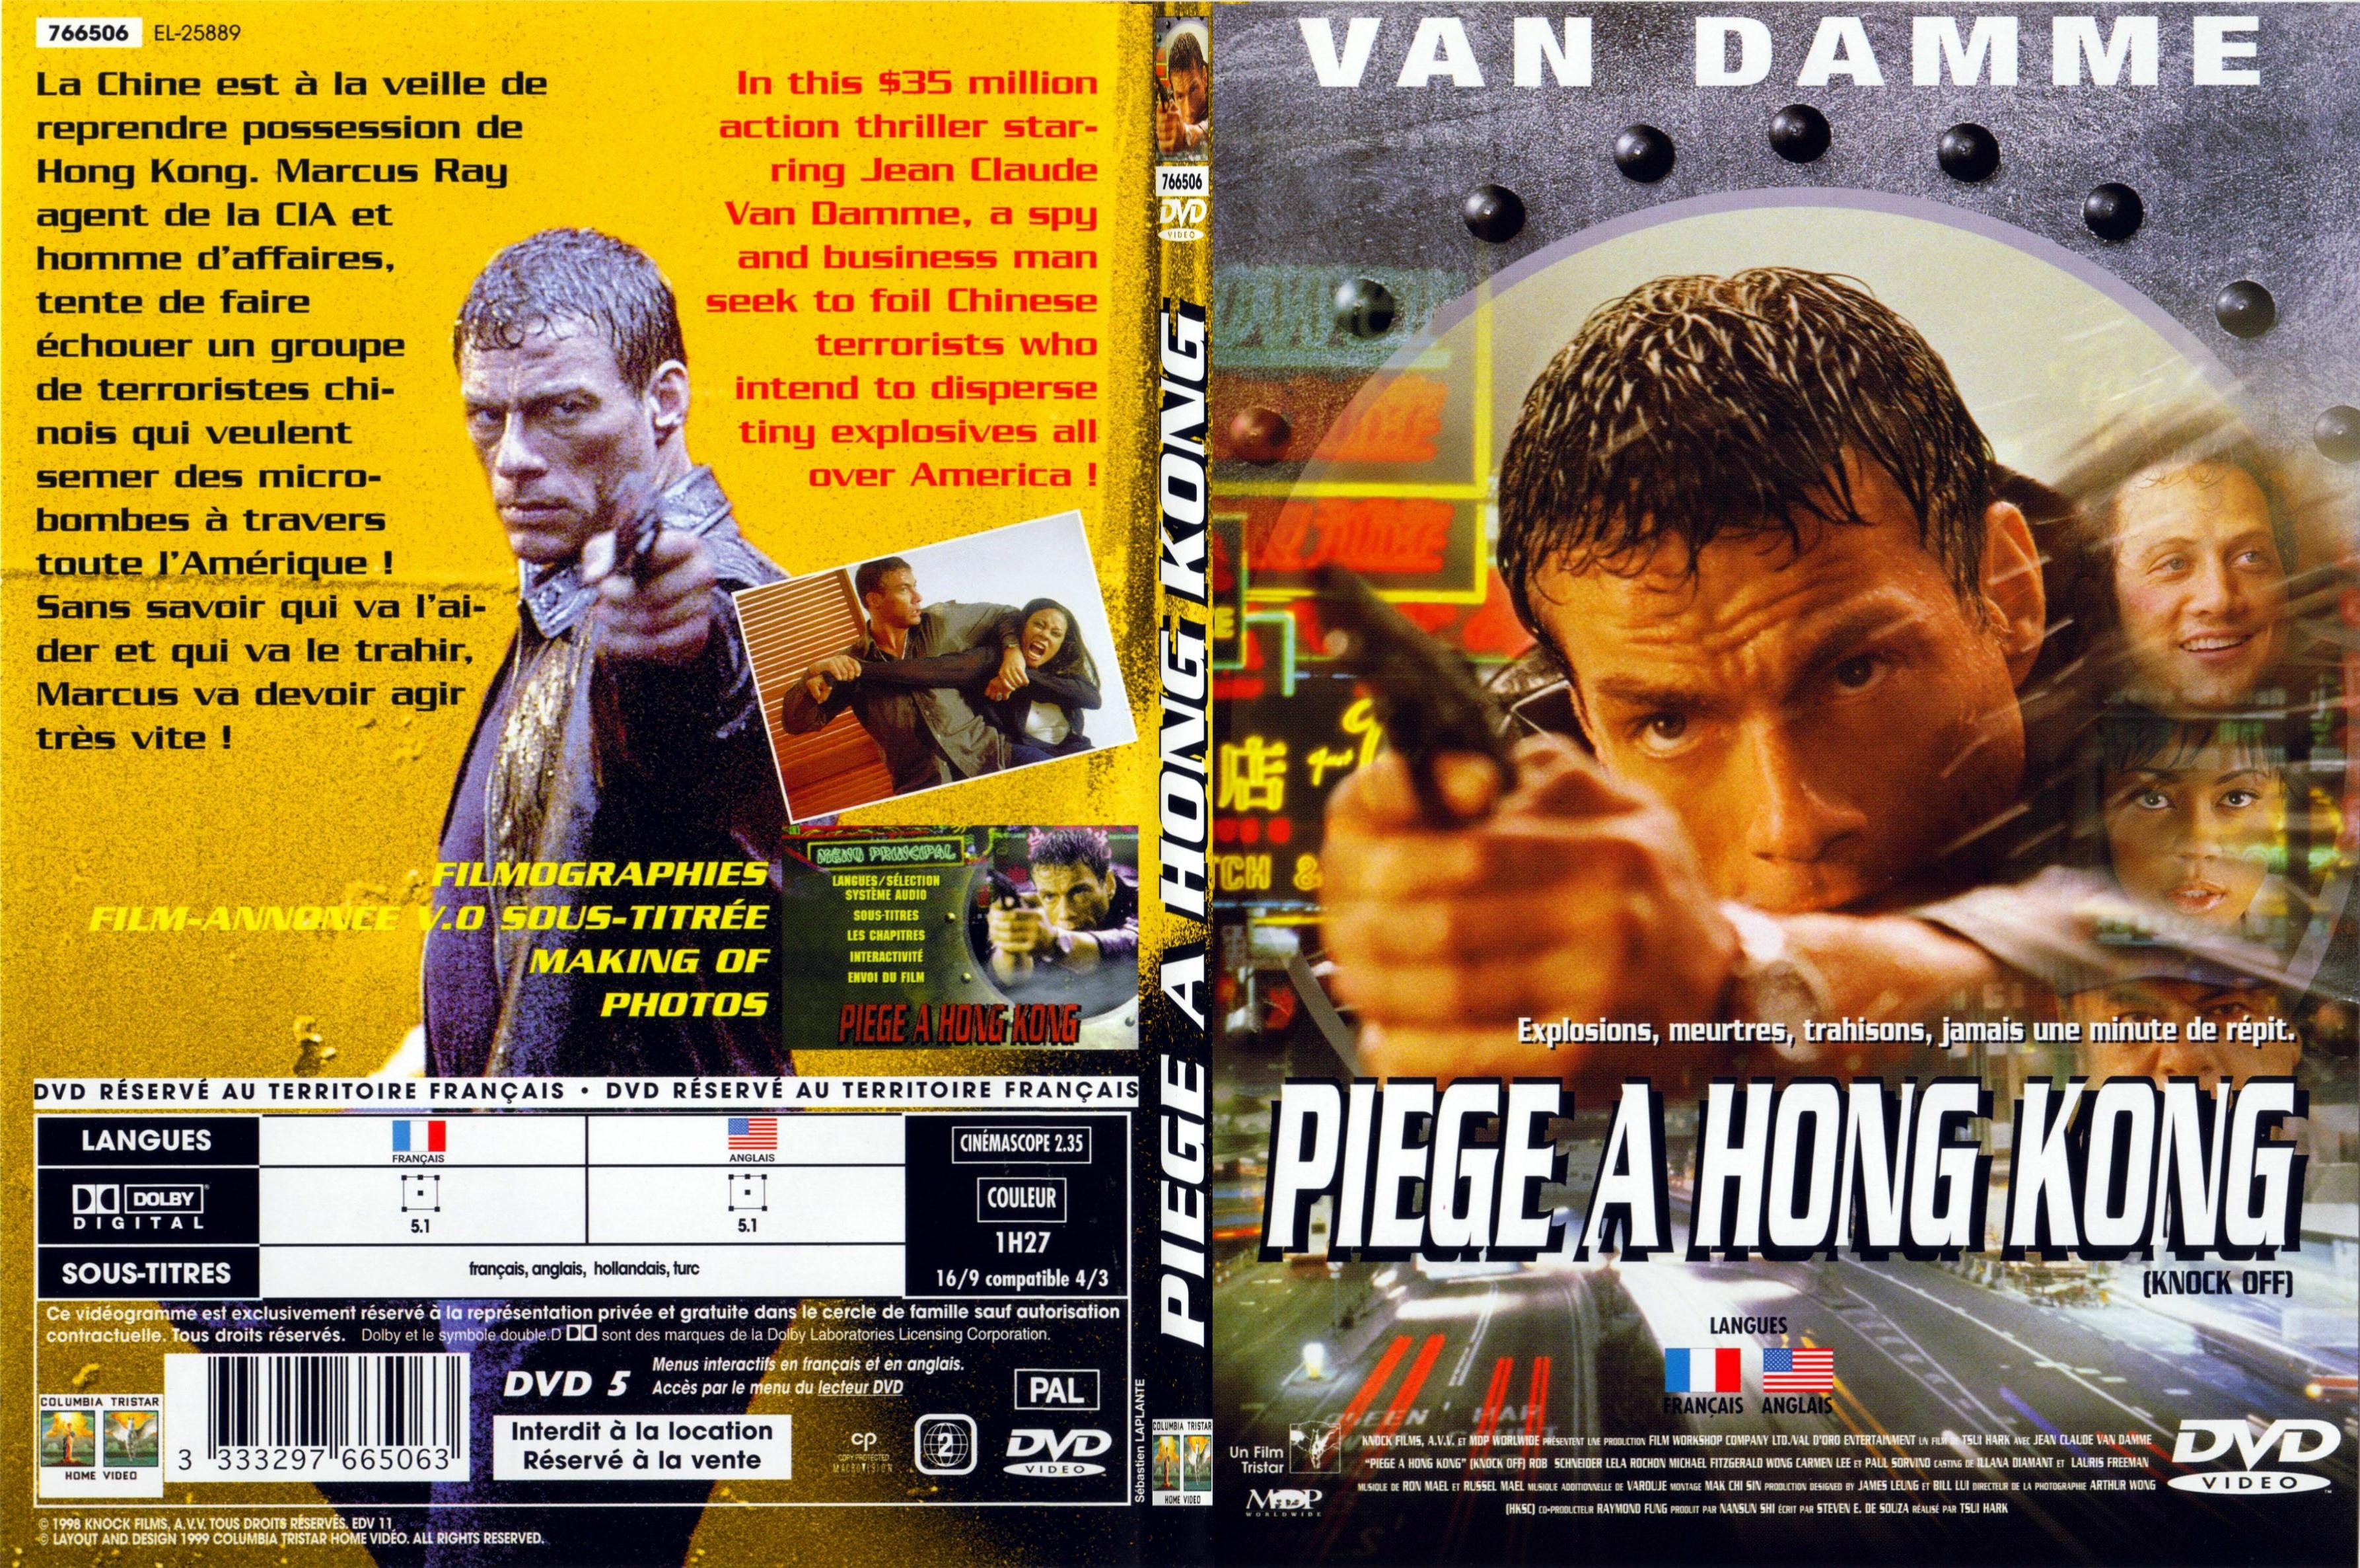 Jaquette DVD Pige  Hong-Kong - SLIM